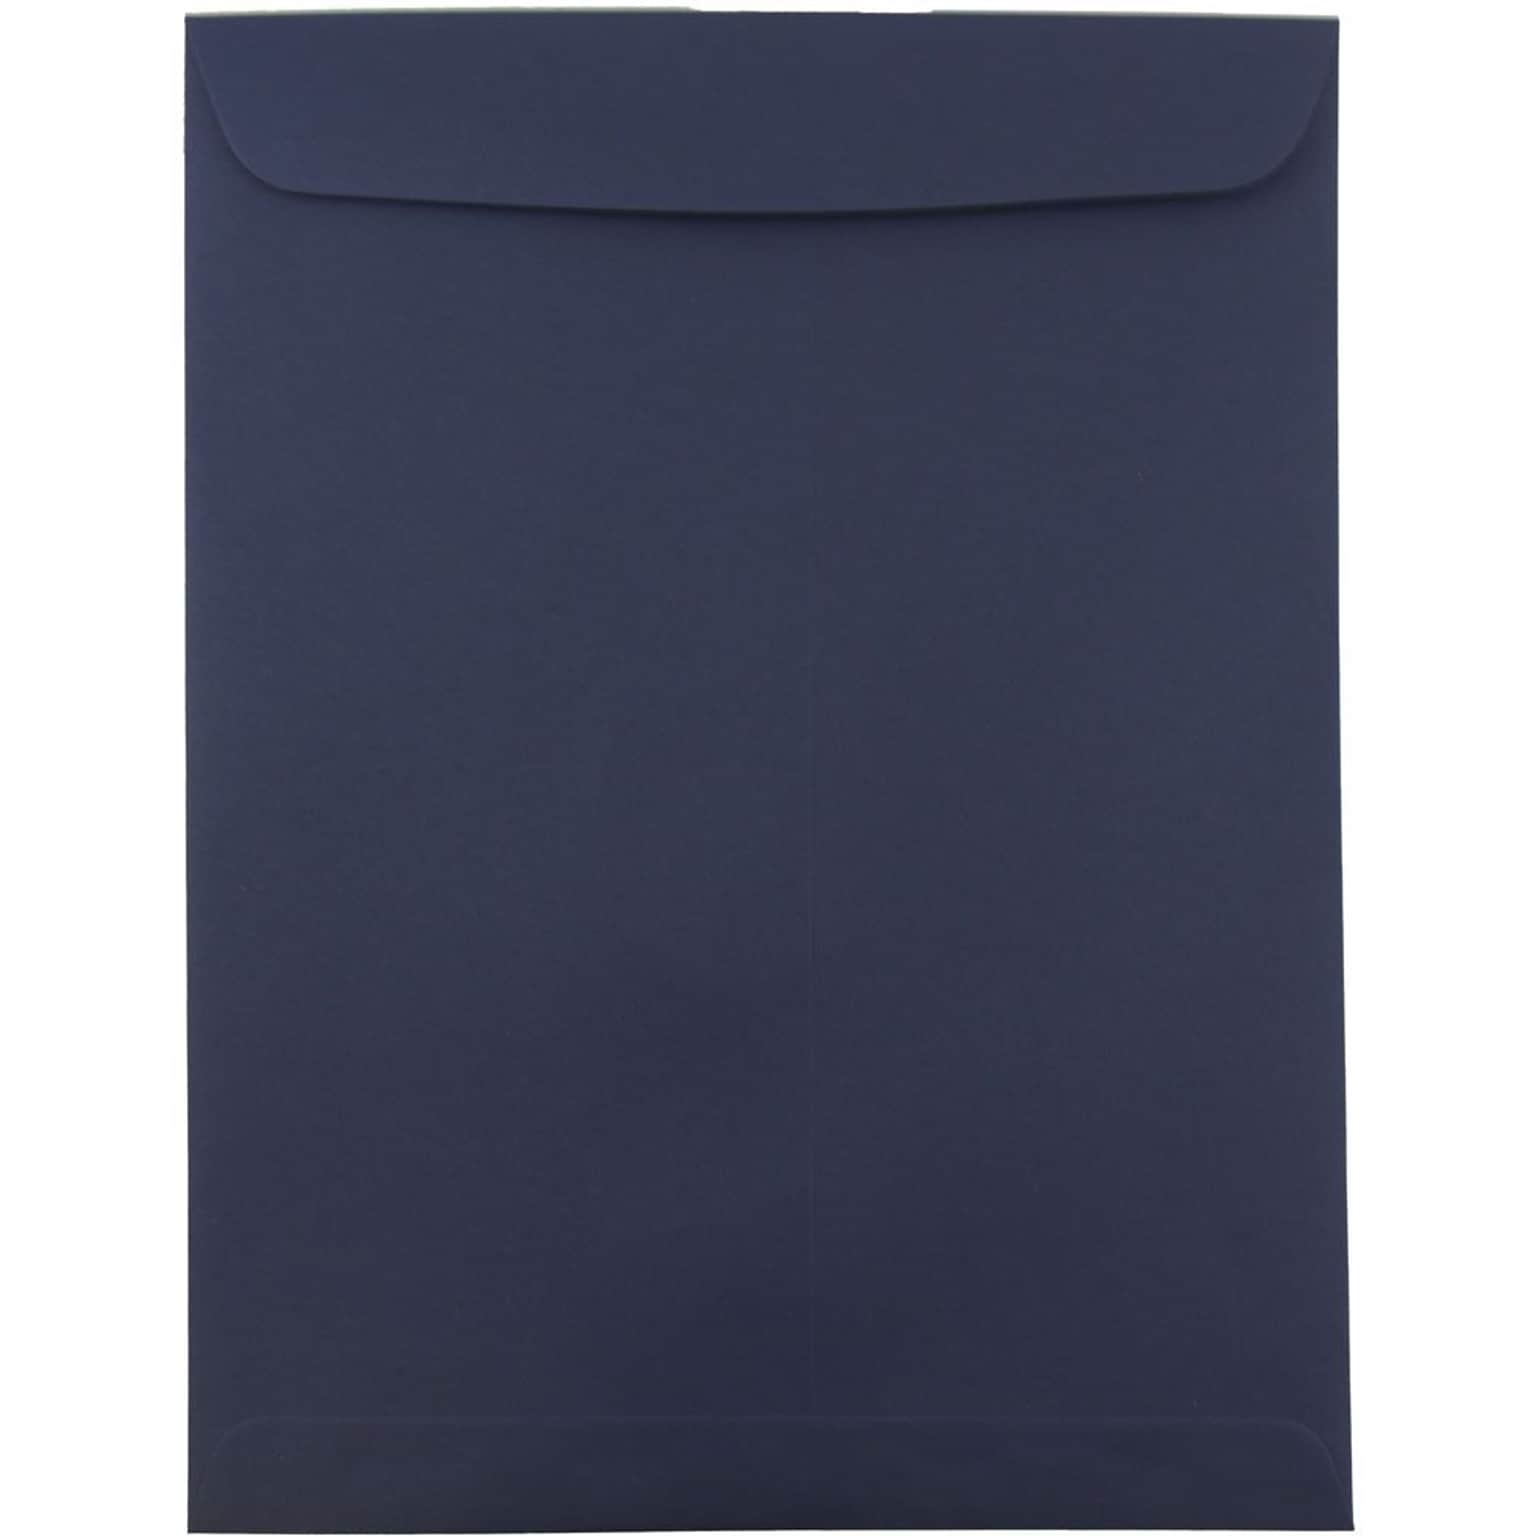 JAM Paper 10 x 13 Open End Catalog Envelopes, Navy Blue, 25/Pack (12828427a)